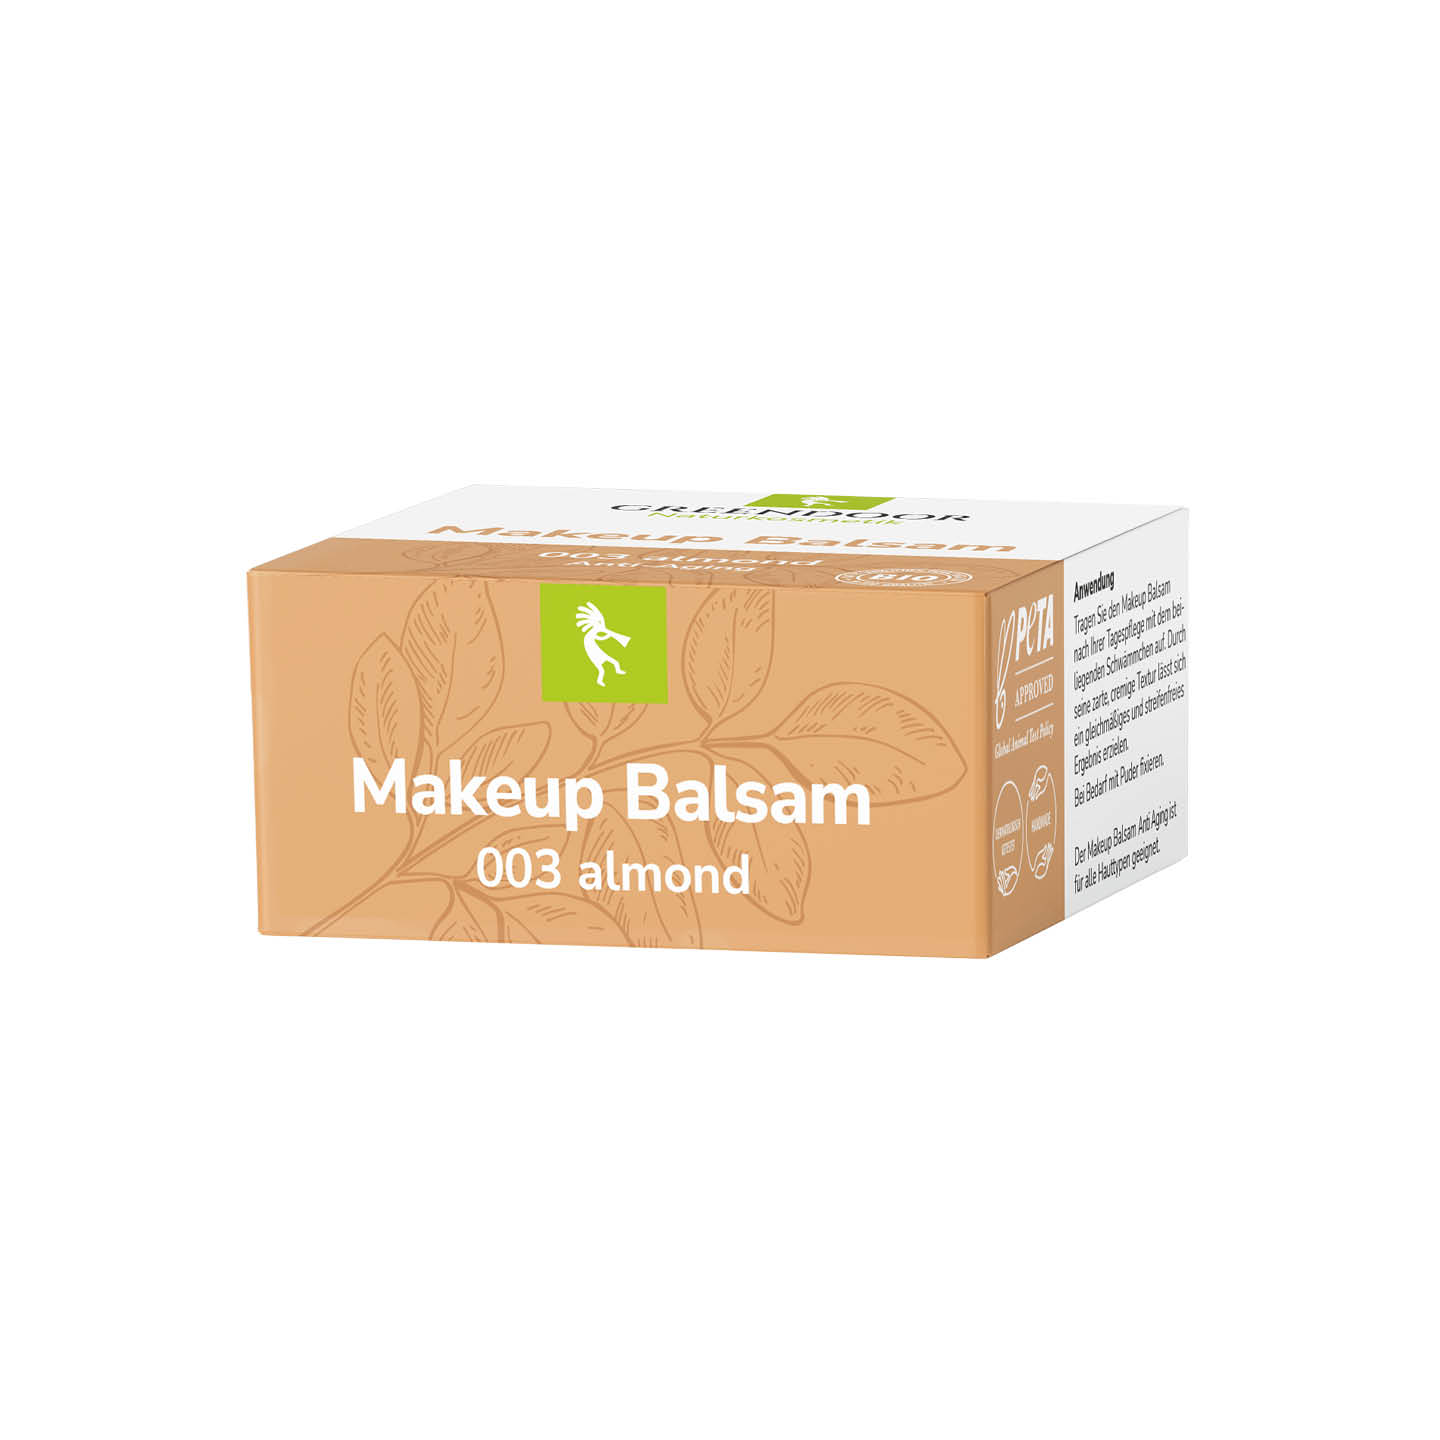 Makeup Balsam Anti Aging - 003 almond, Kompakt Make-up 25g